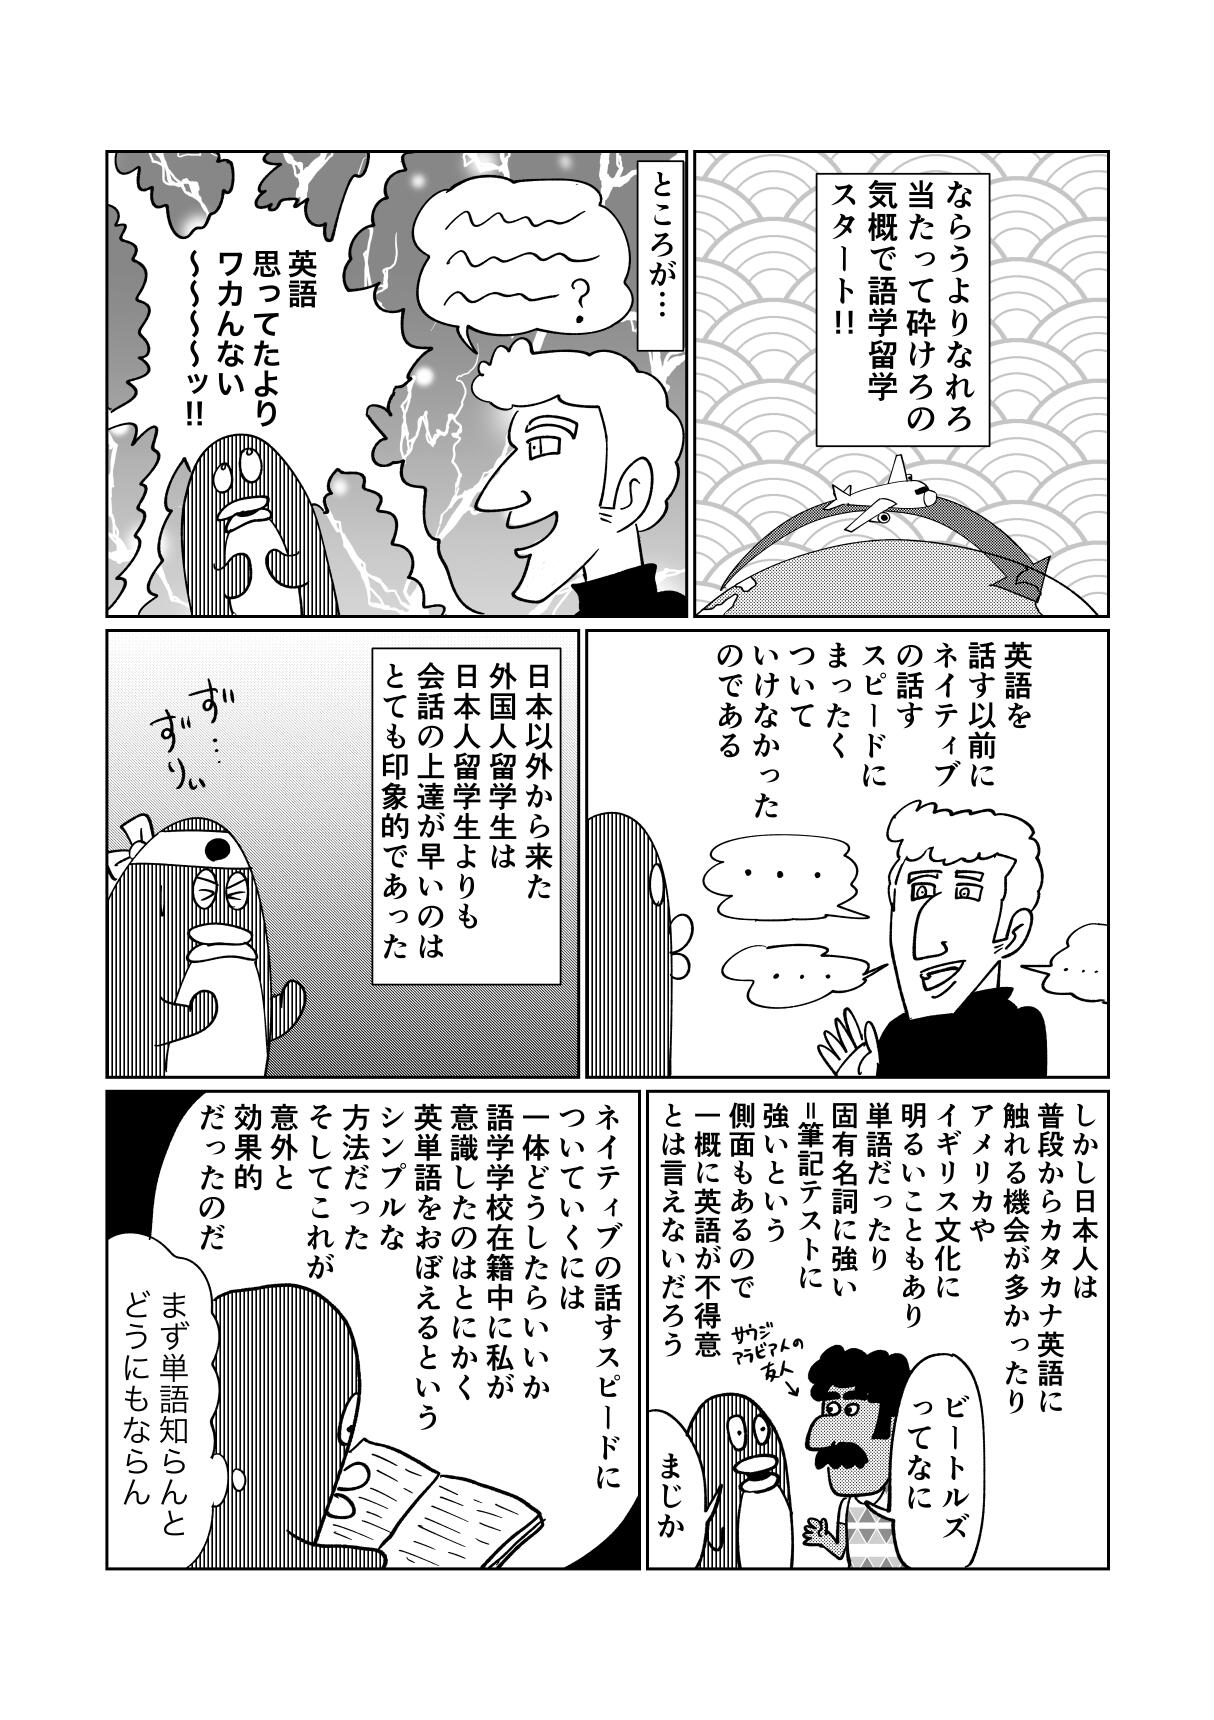 https://www.ryugaku.co.jp/column/images/6_2_1200.jpg